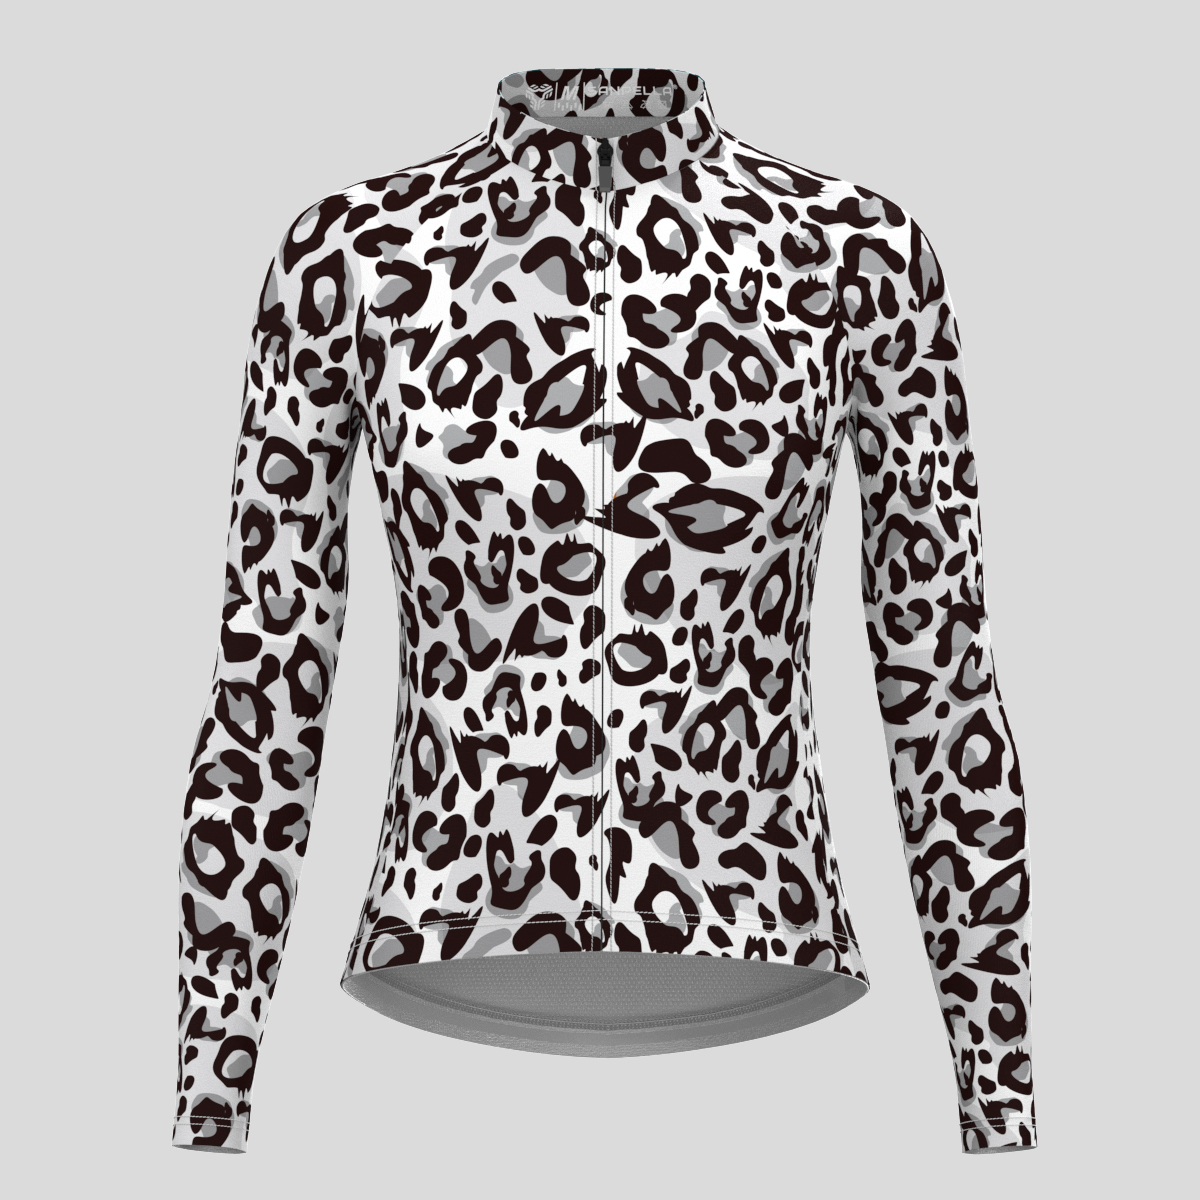 Leopard Print Women's LS Cycling Jersey - Black/White